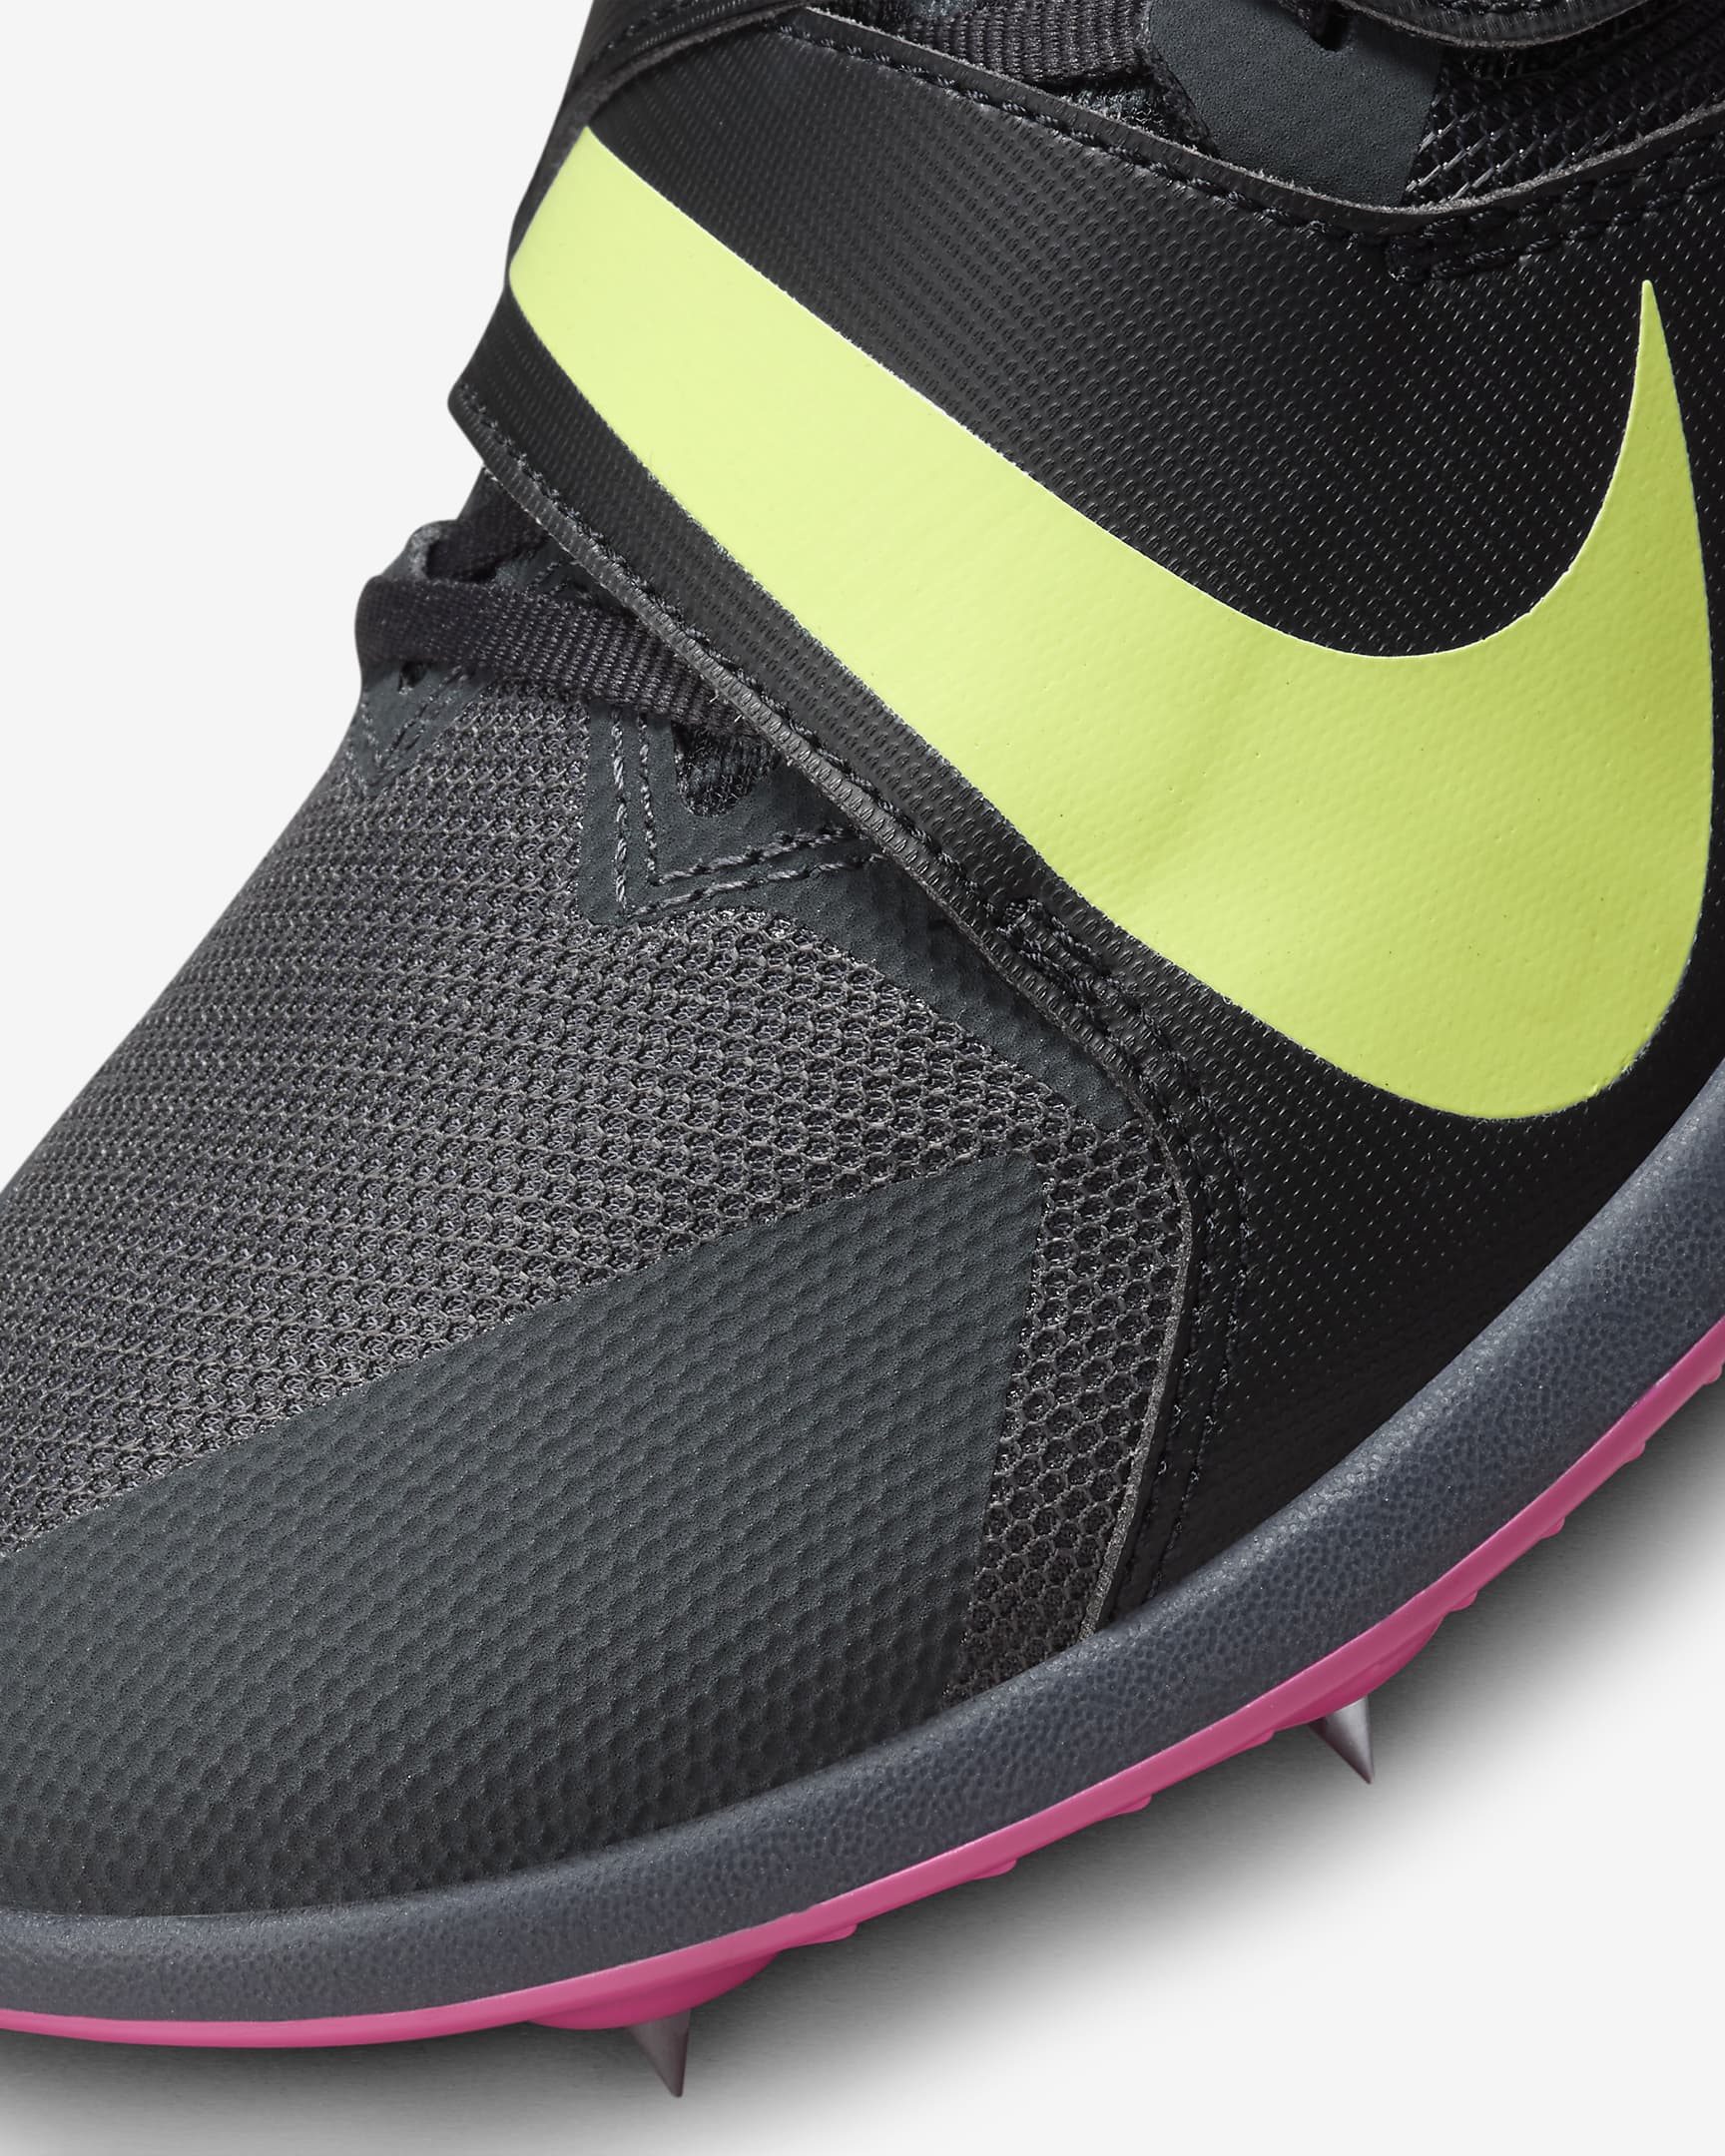 Sapatilhas de salto para atletismo Nike Rival Jump - Anthracite/Preto/Light Lemon Twist/Rosa Fierce